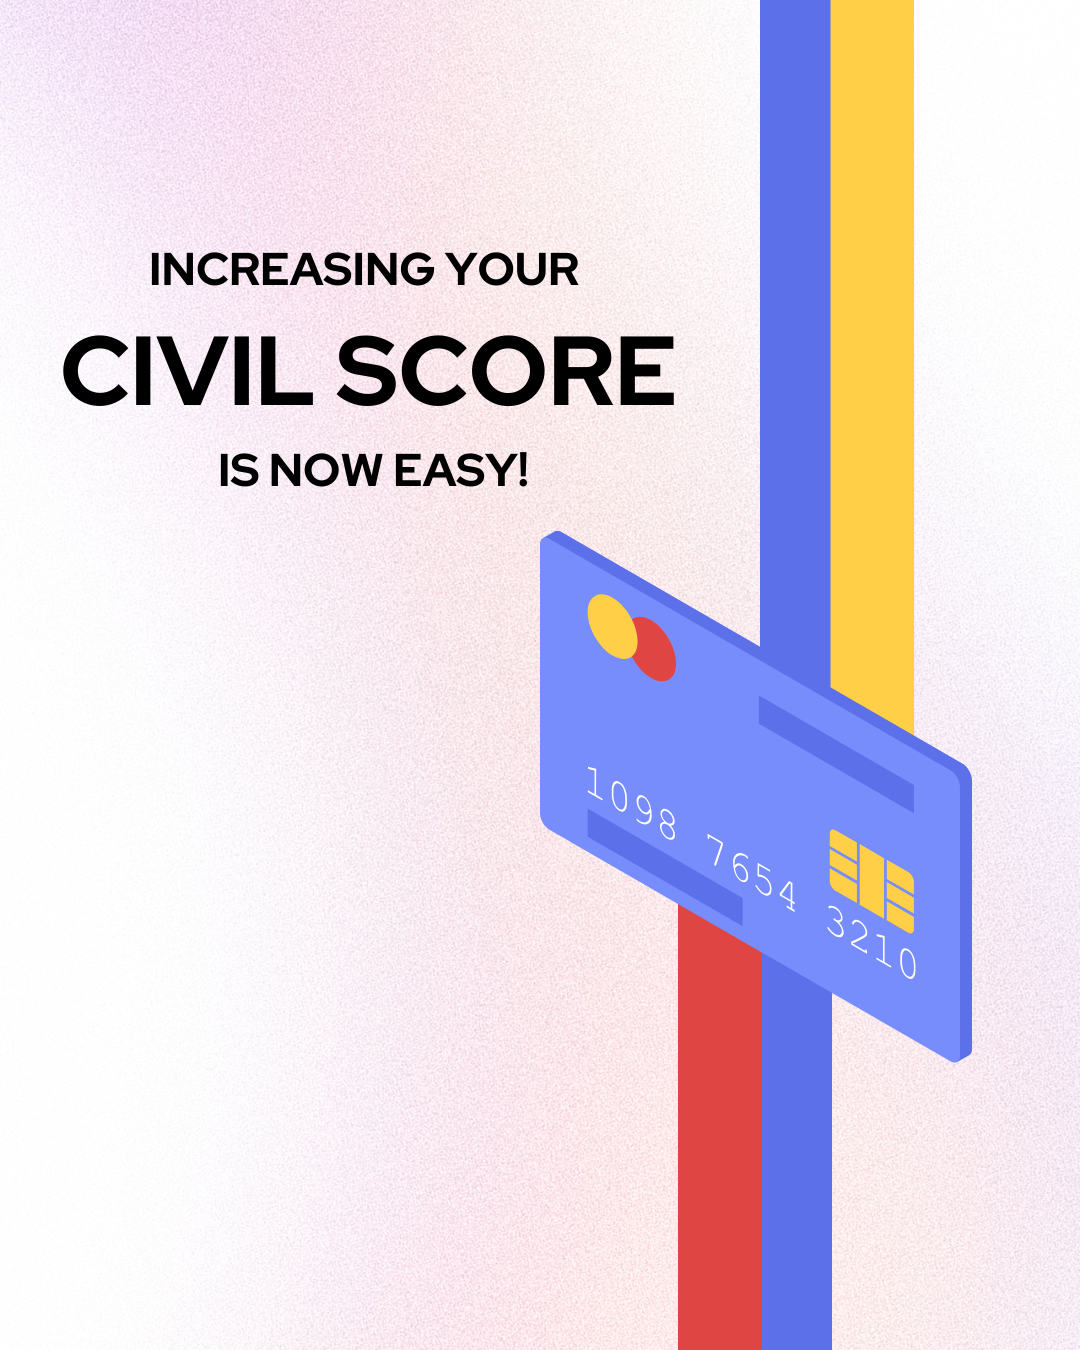 Civil score